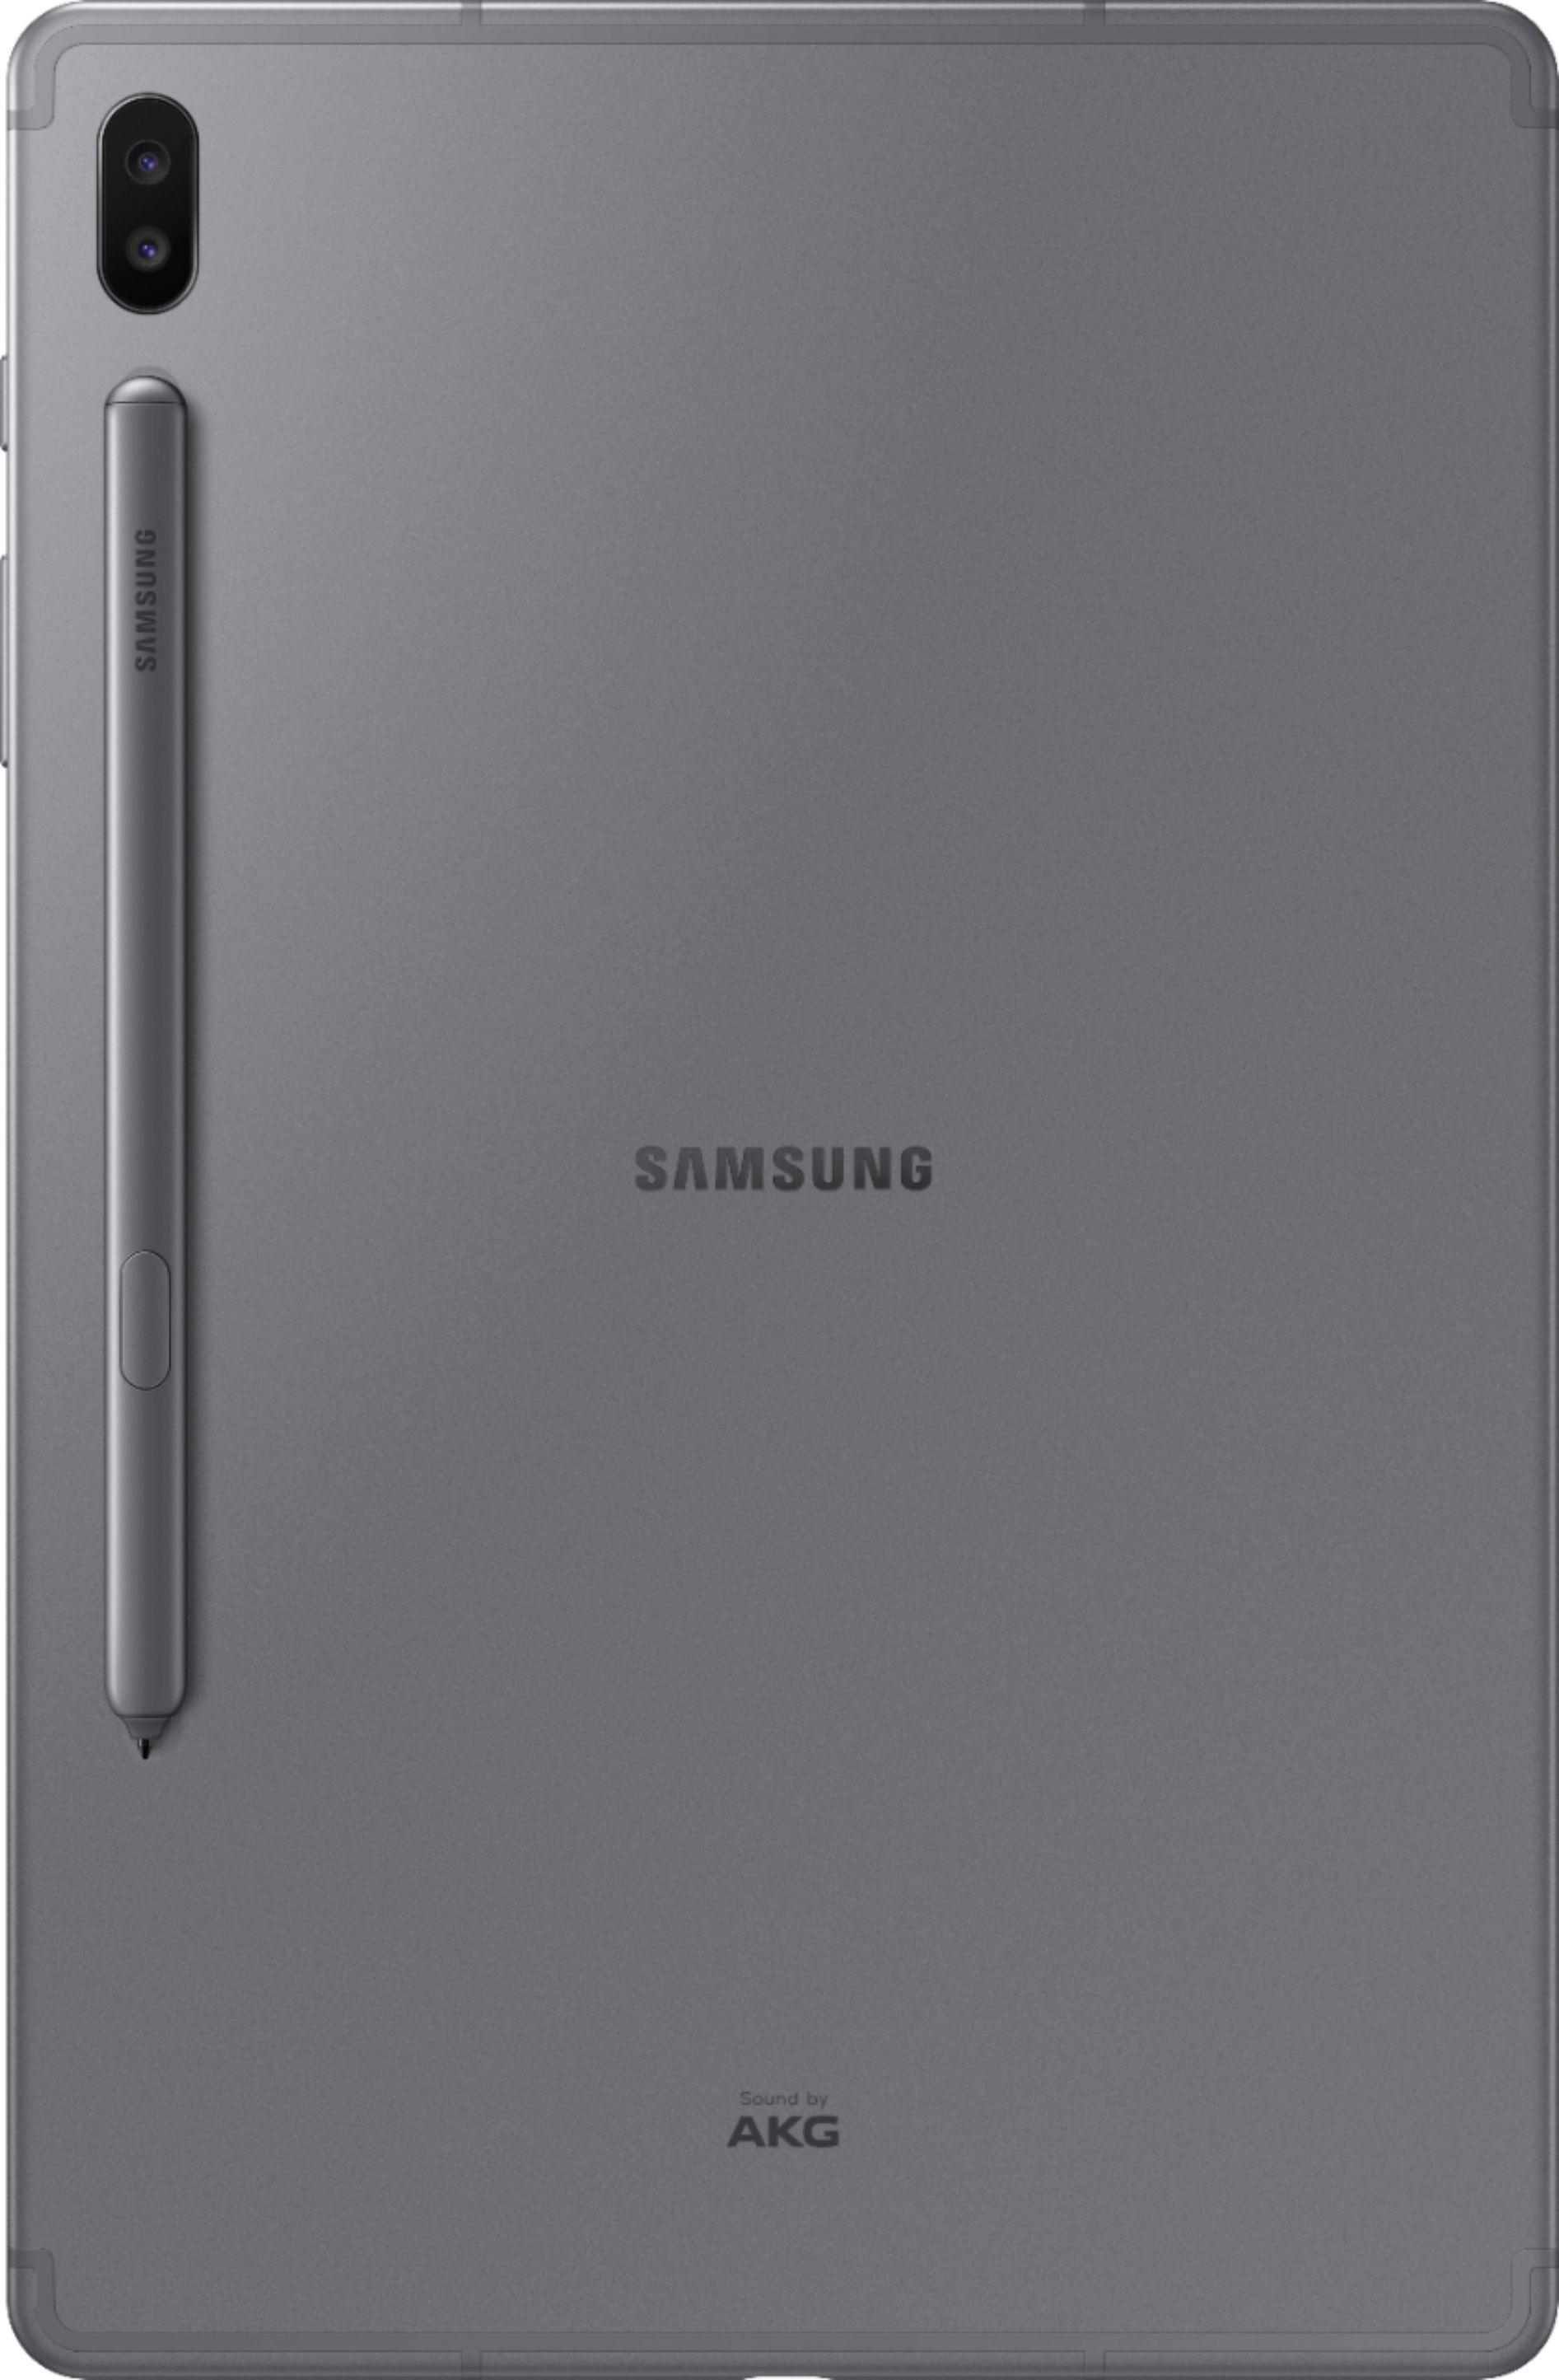 Samsung Galaxy Tab S6 10.5 256GB Grey